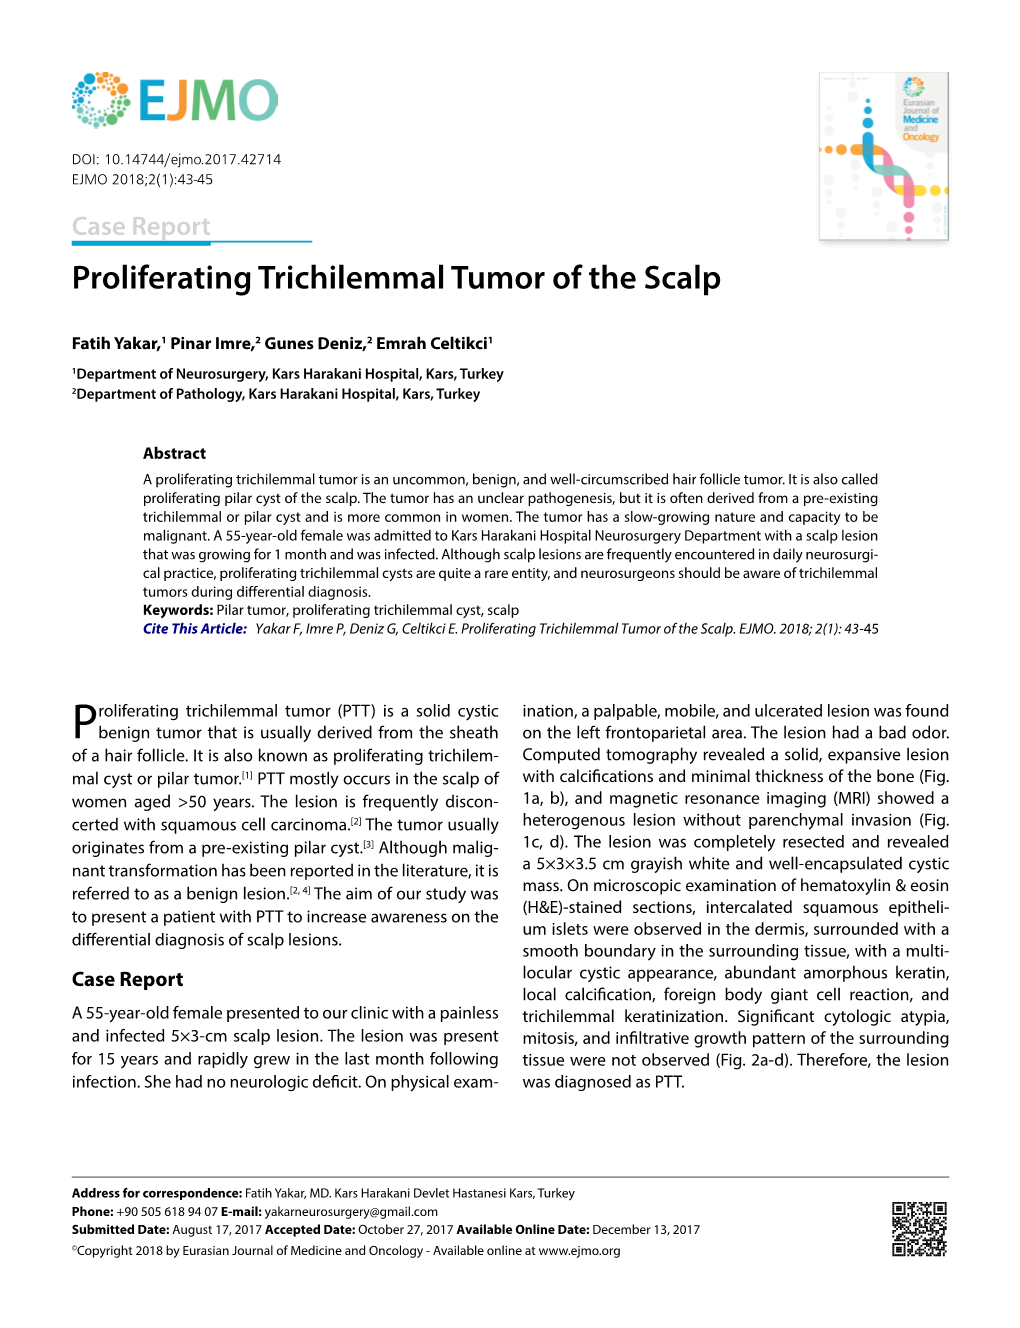 Proliferating Trichilemmal Tumor of the Scalp